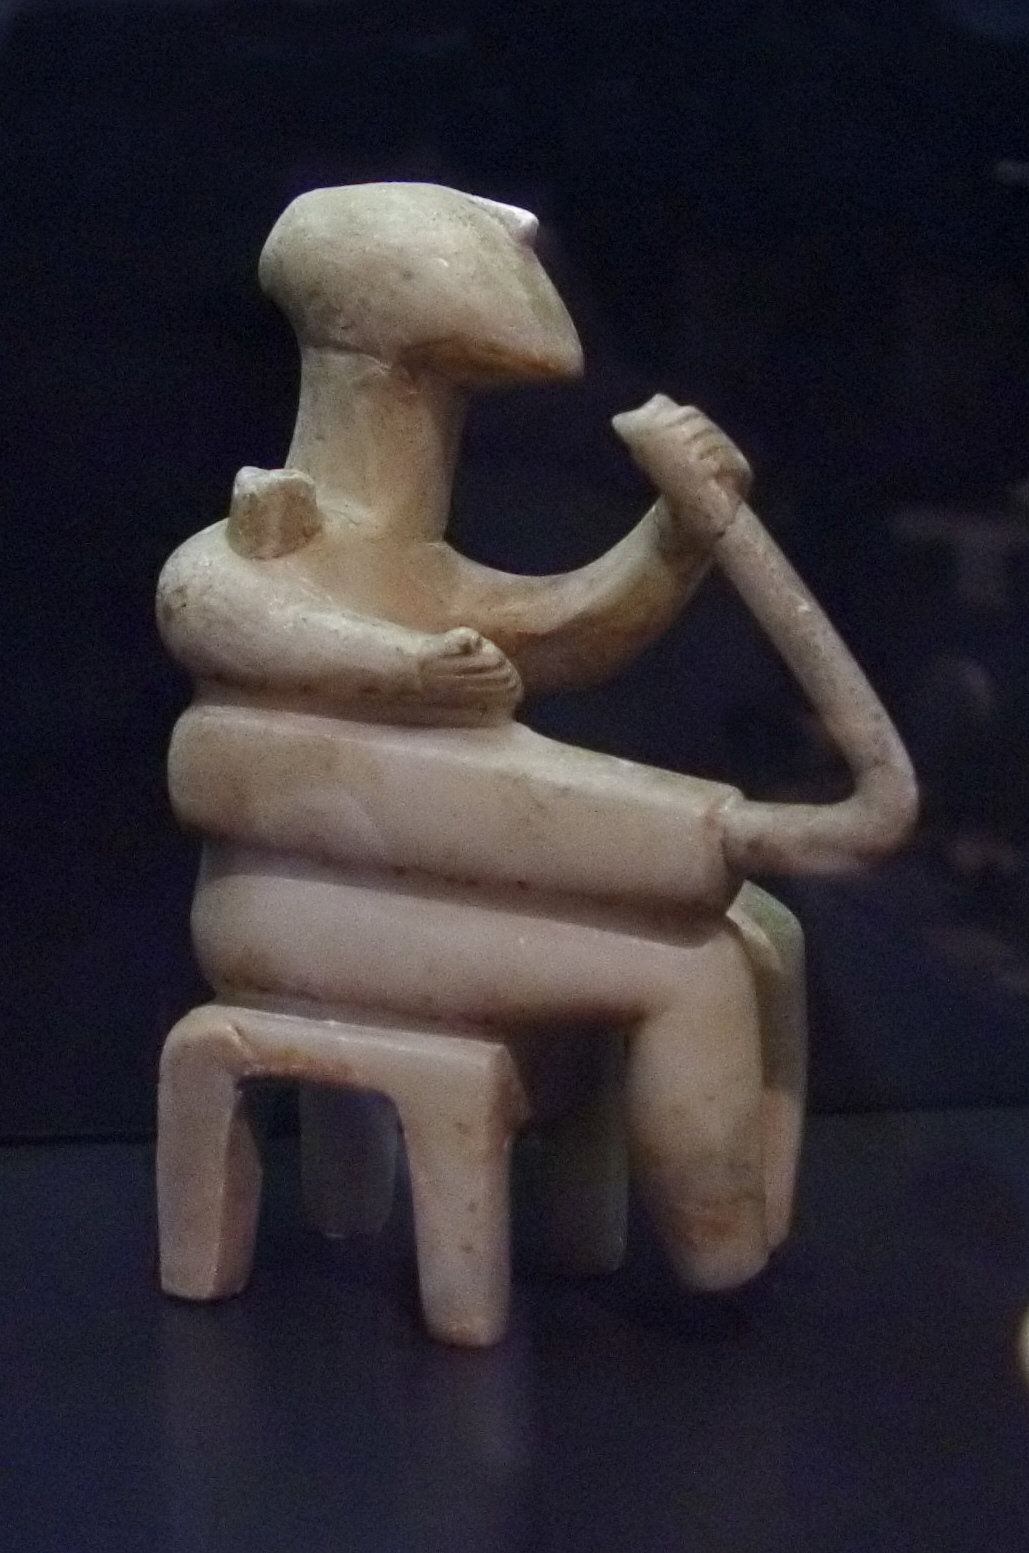 Cycladic culture, harp playing idol